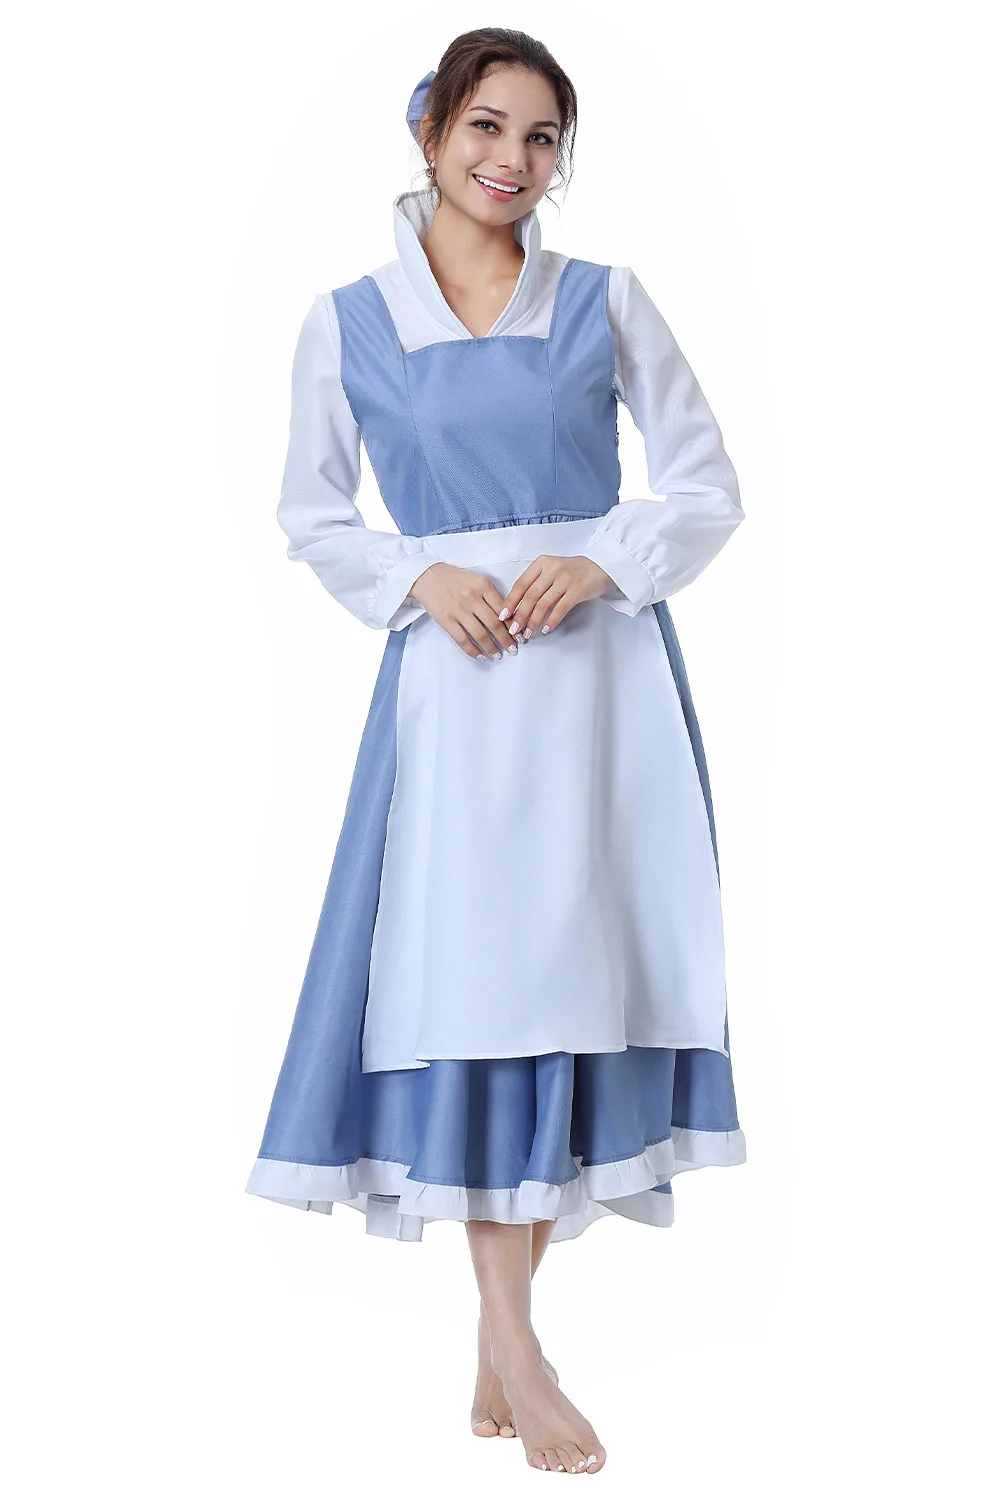 Adult Women Beauty Princess Belle Dress Halloween Cosplay Costume Maid ...